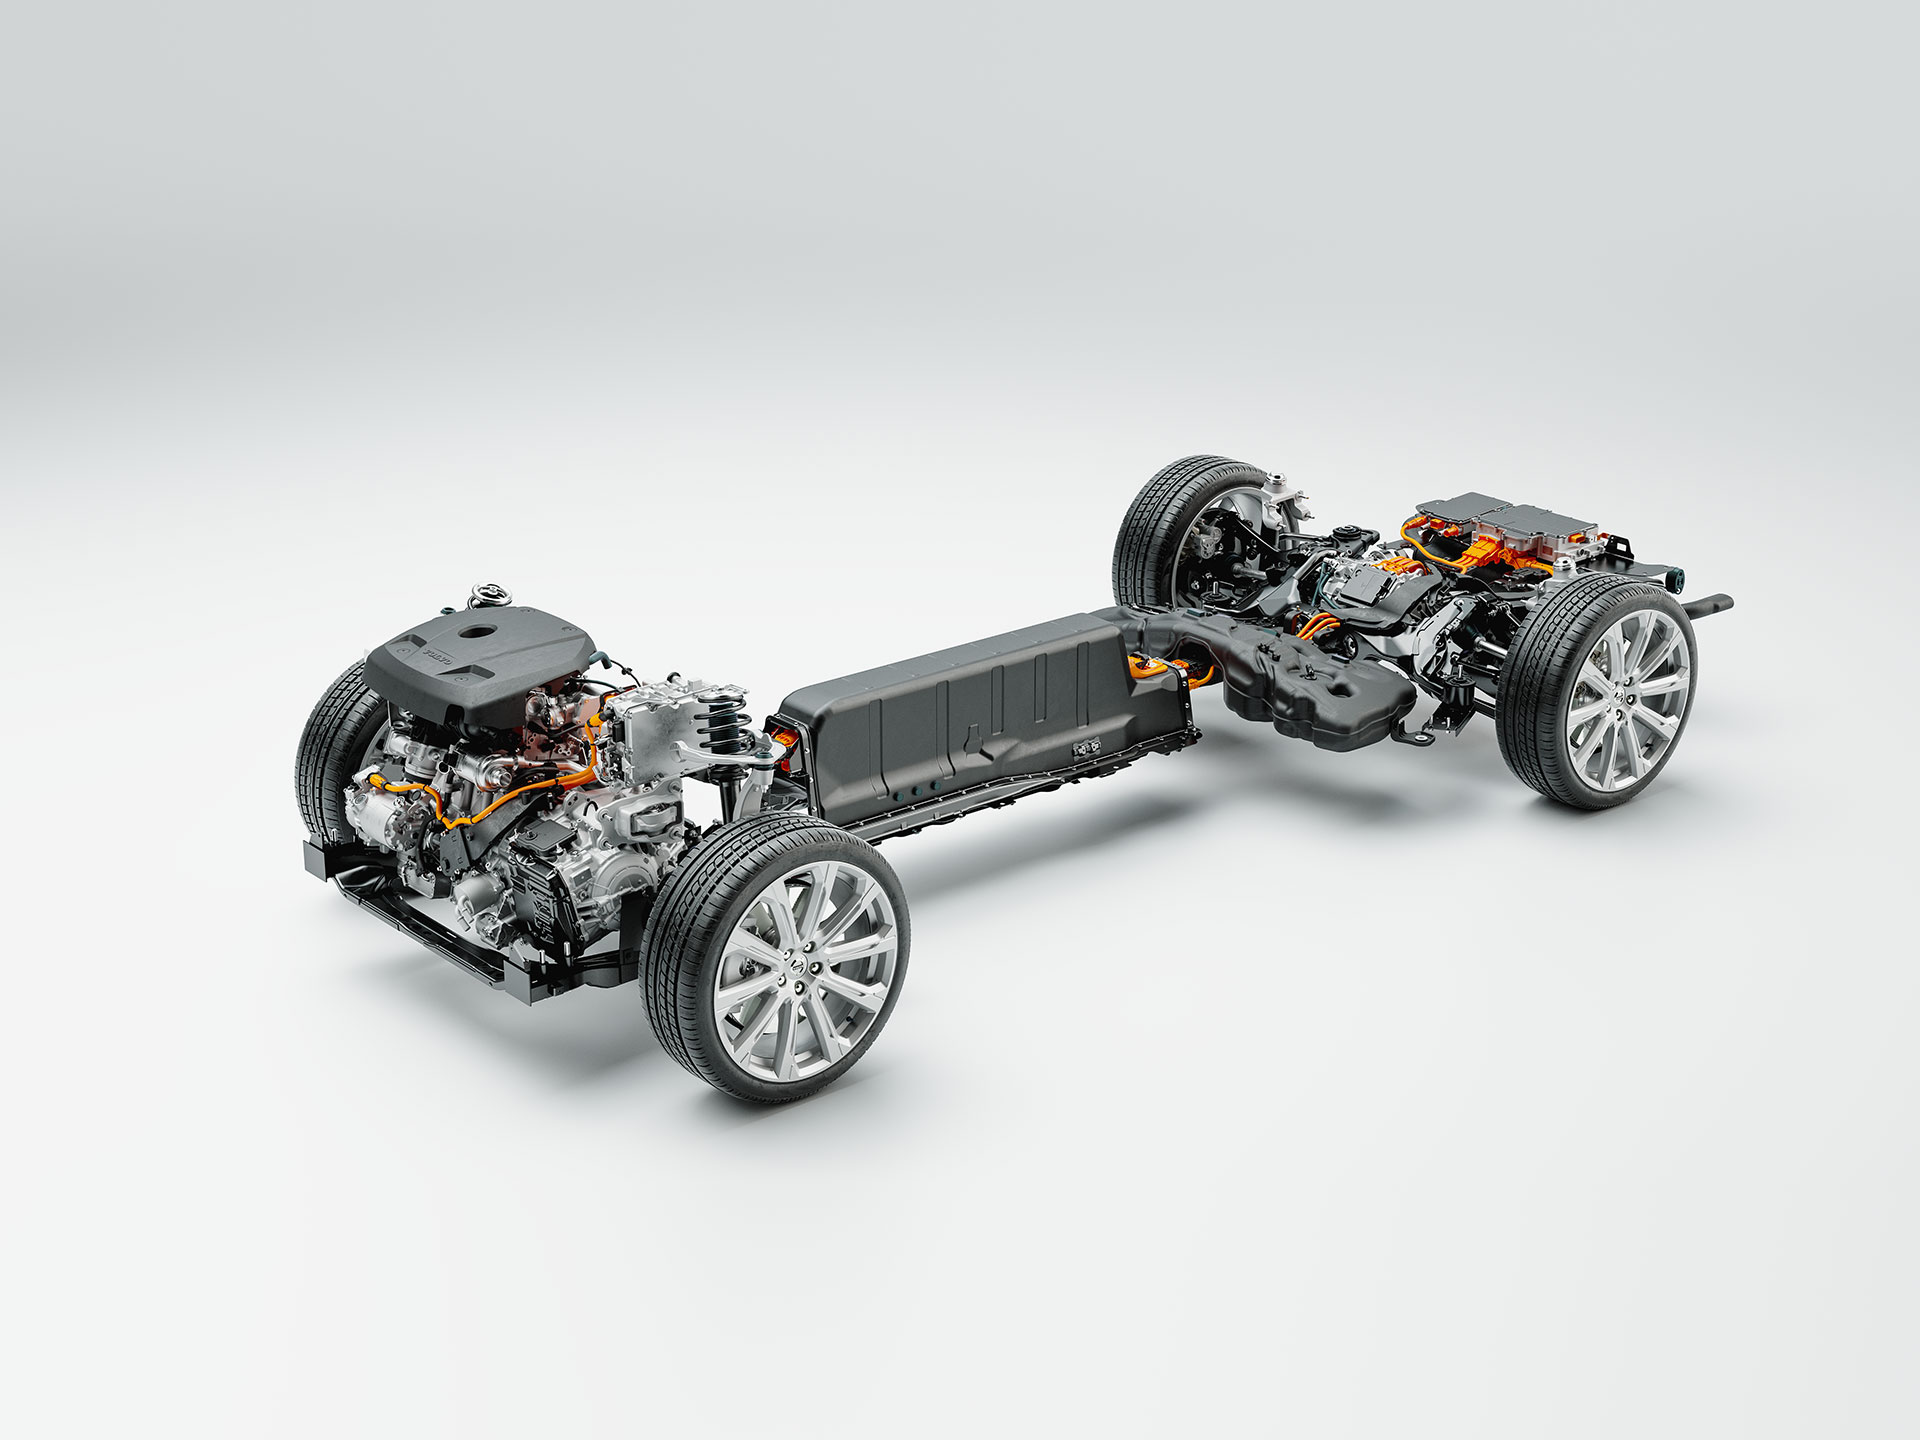 Tehnički crtež detalja šasije, baterije i pogonskog sklopa Volvo plug-in hibrida.